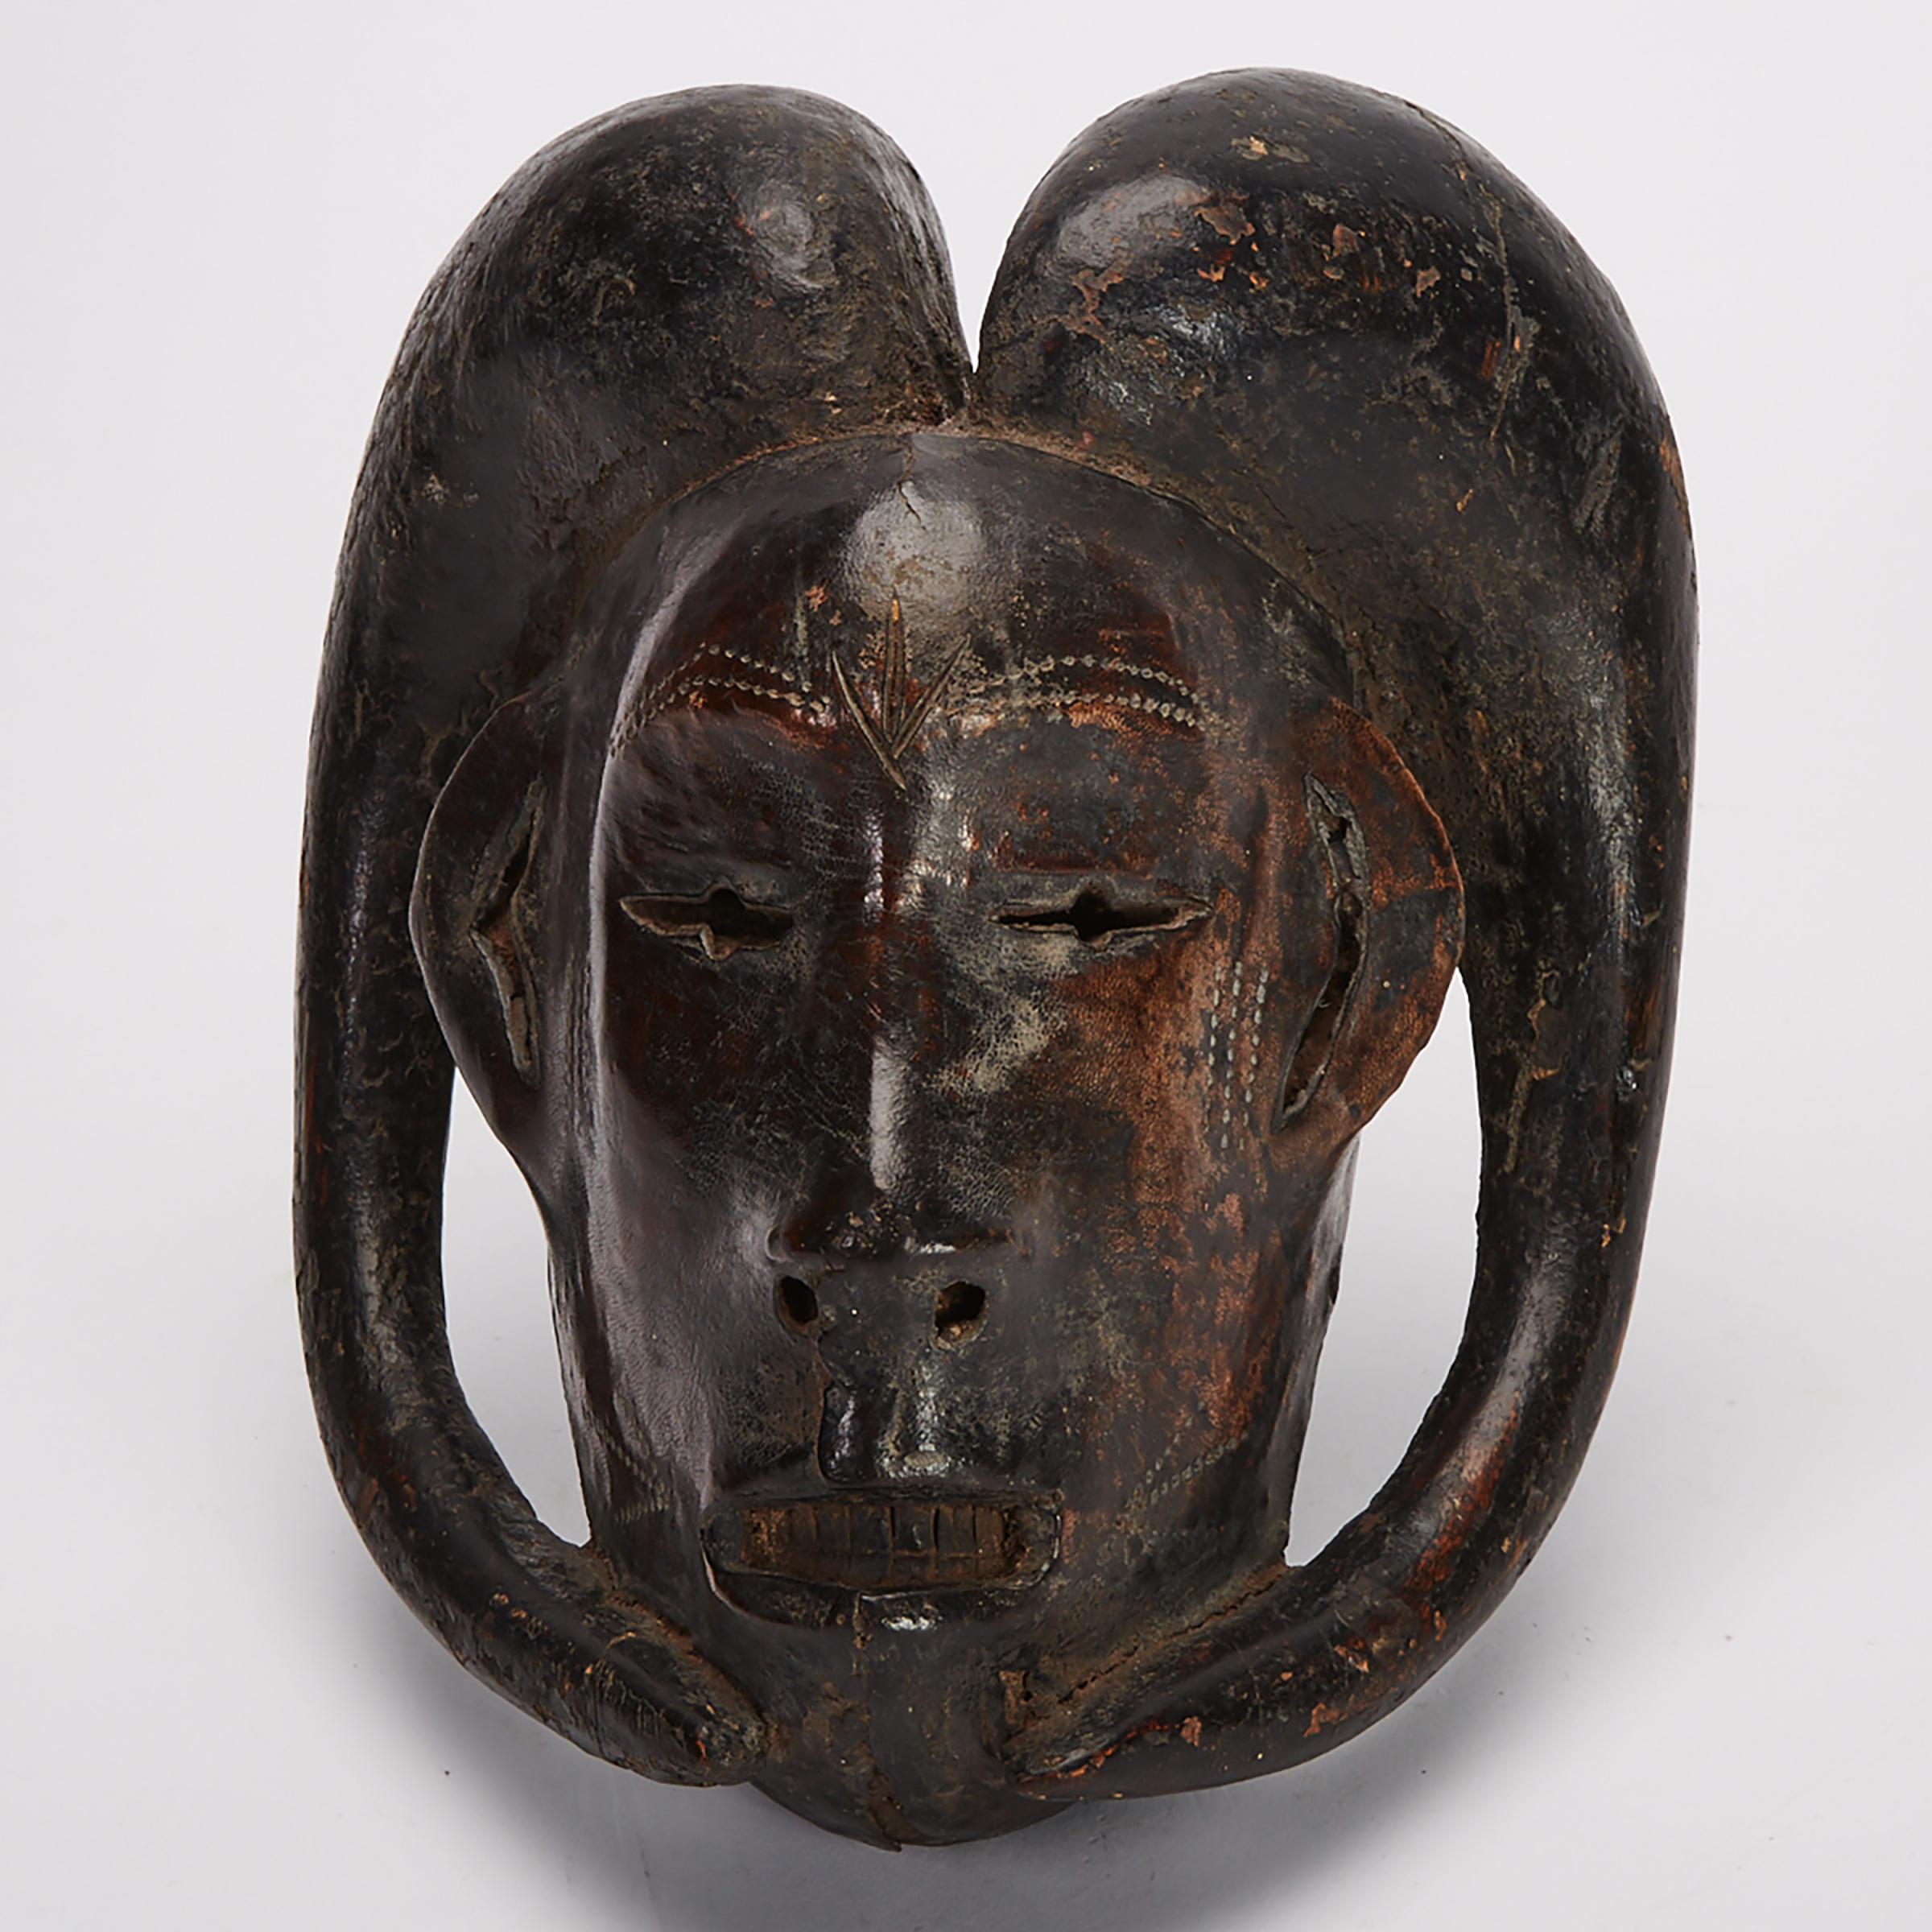 Anthrop-zoomorphic mask, possibly Ekoi or Guro, Africa